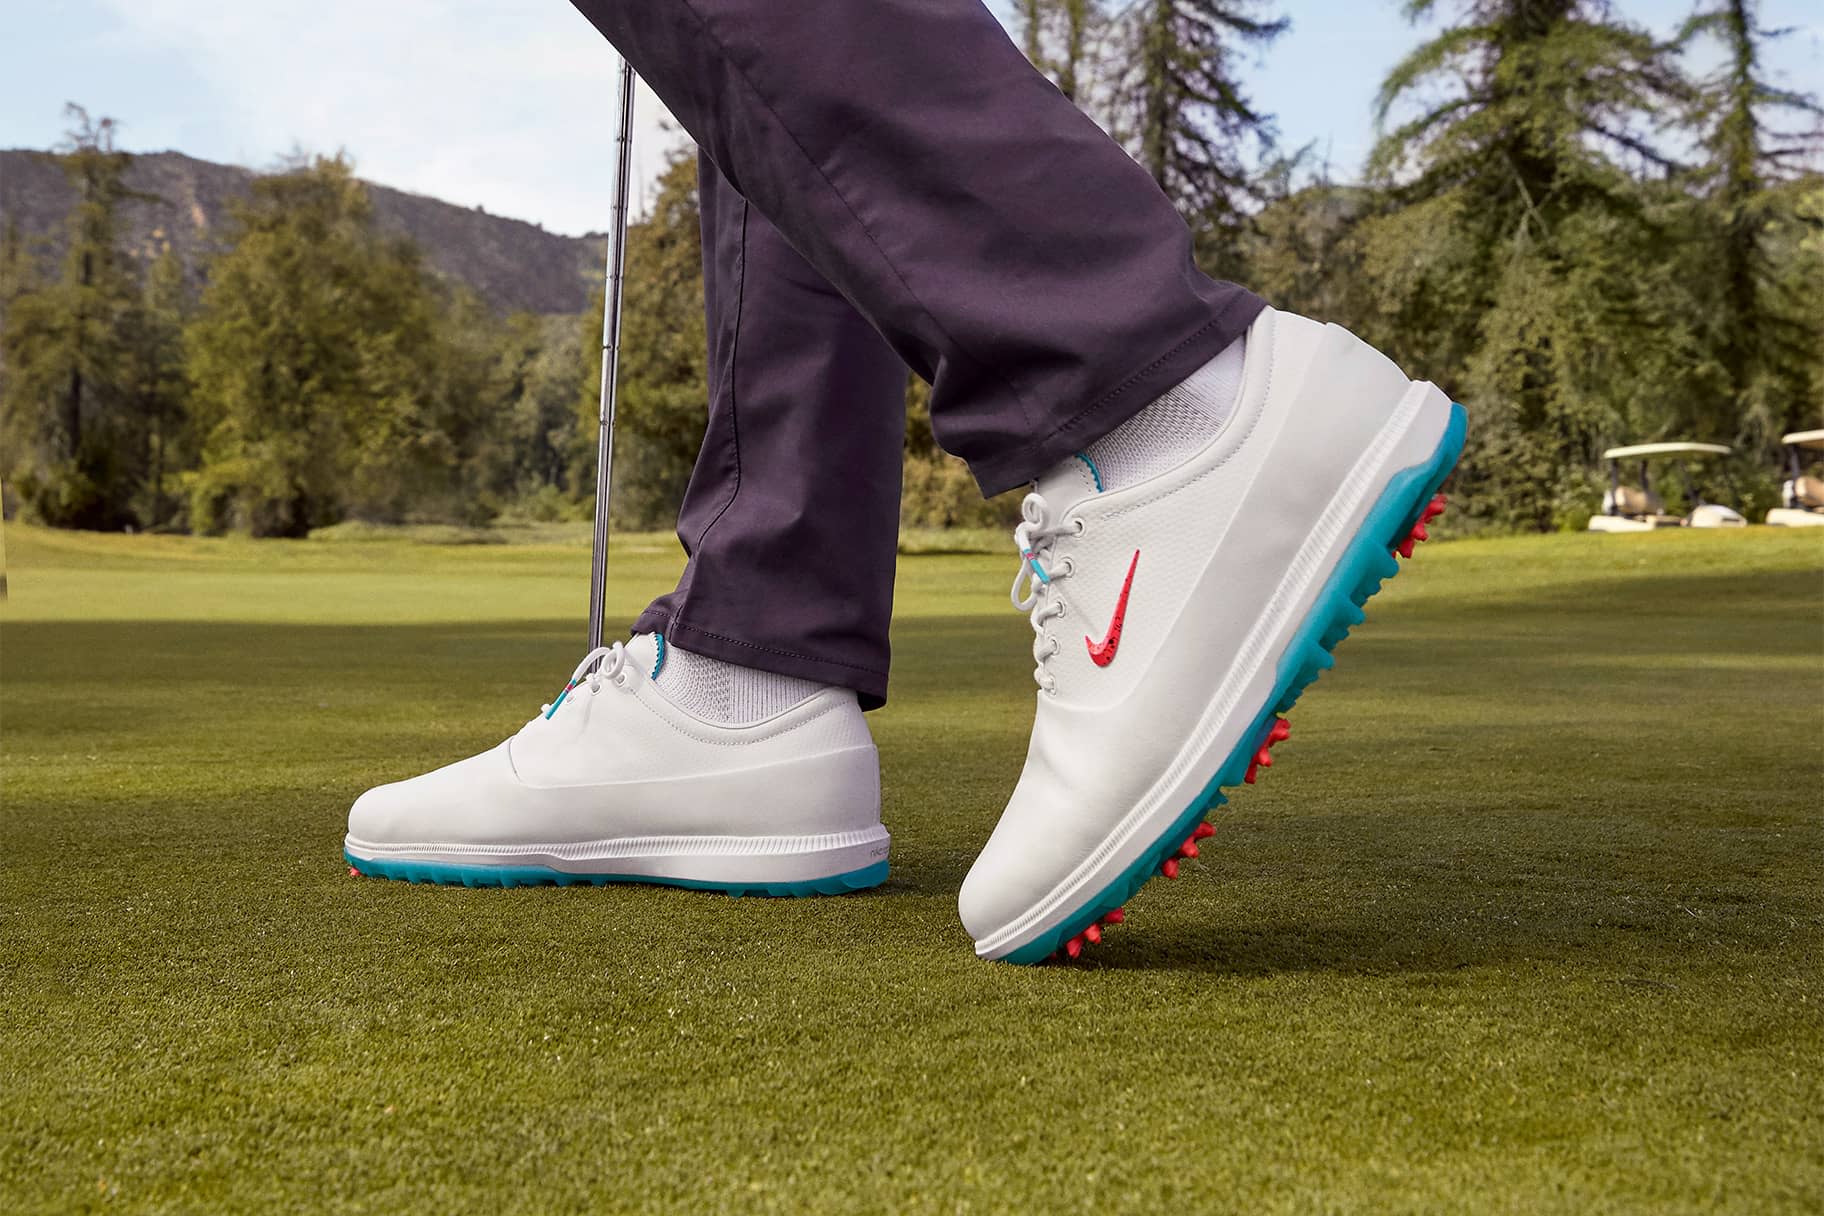 Le migliori scarpe da golf Nike per trazione, stabilità e comfort